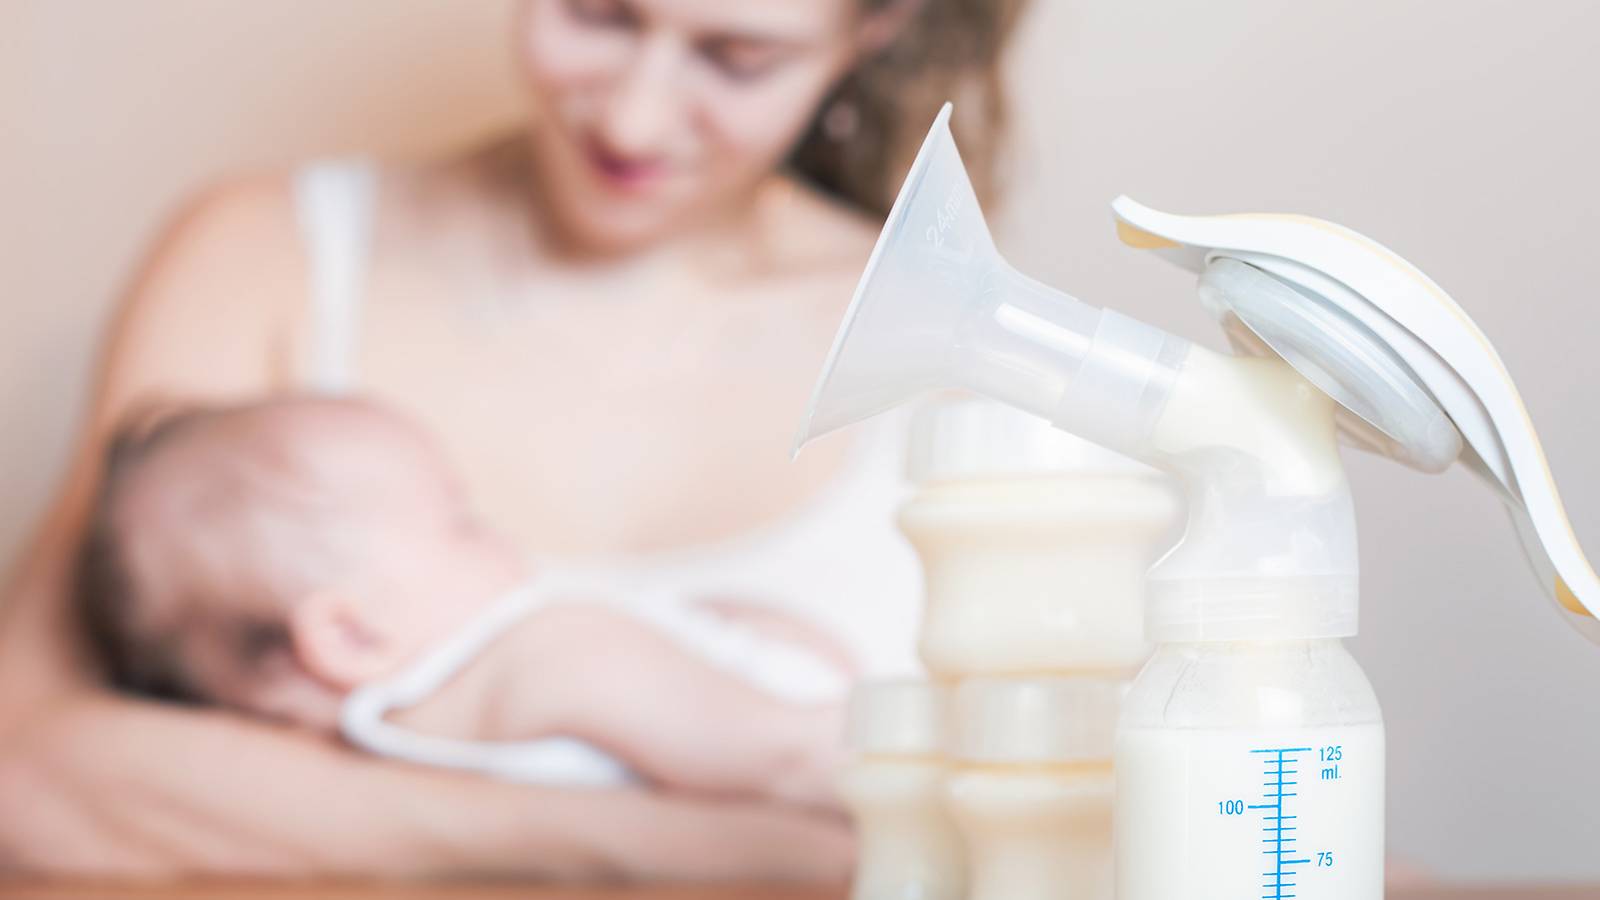 Babies-Expressing-breastmillk-How-to-pump-more-1